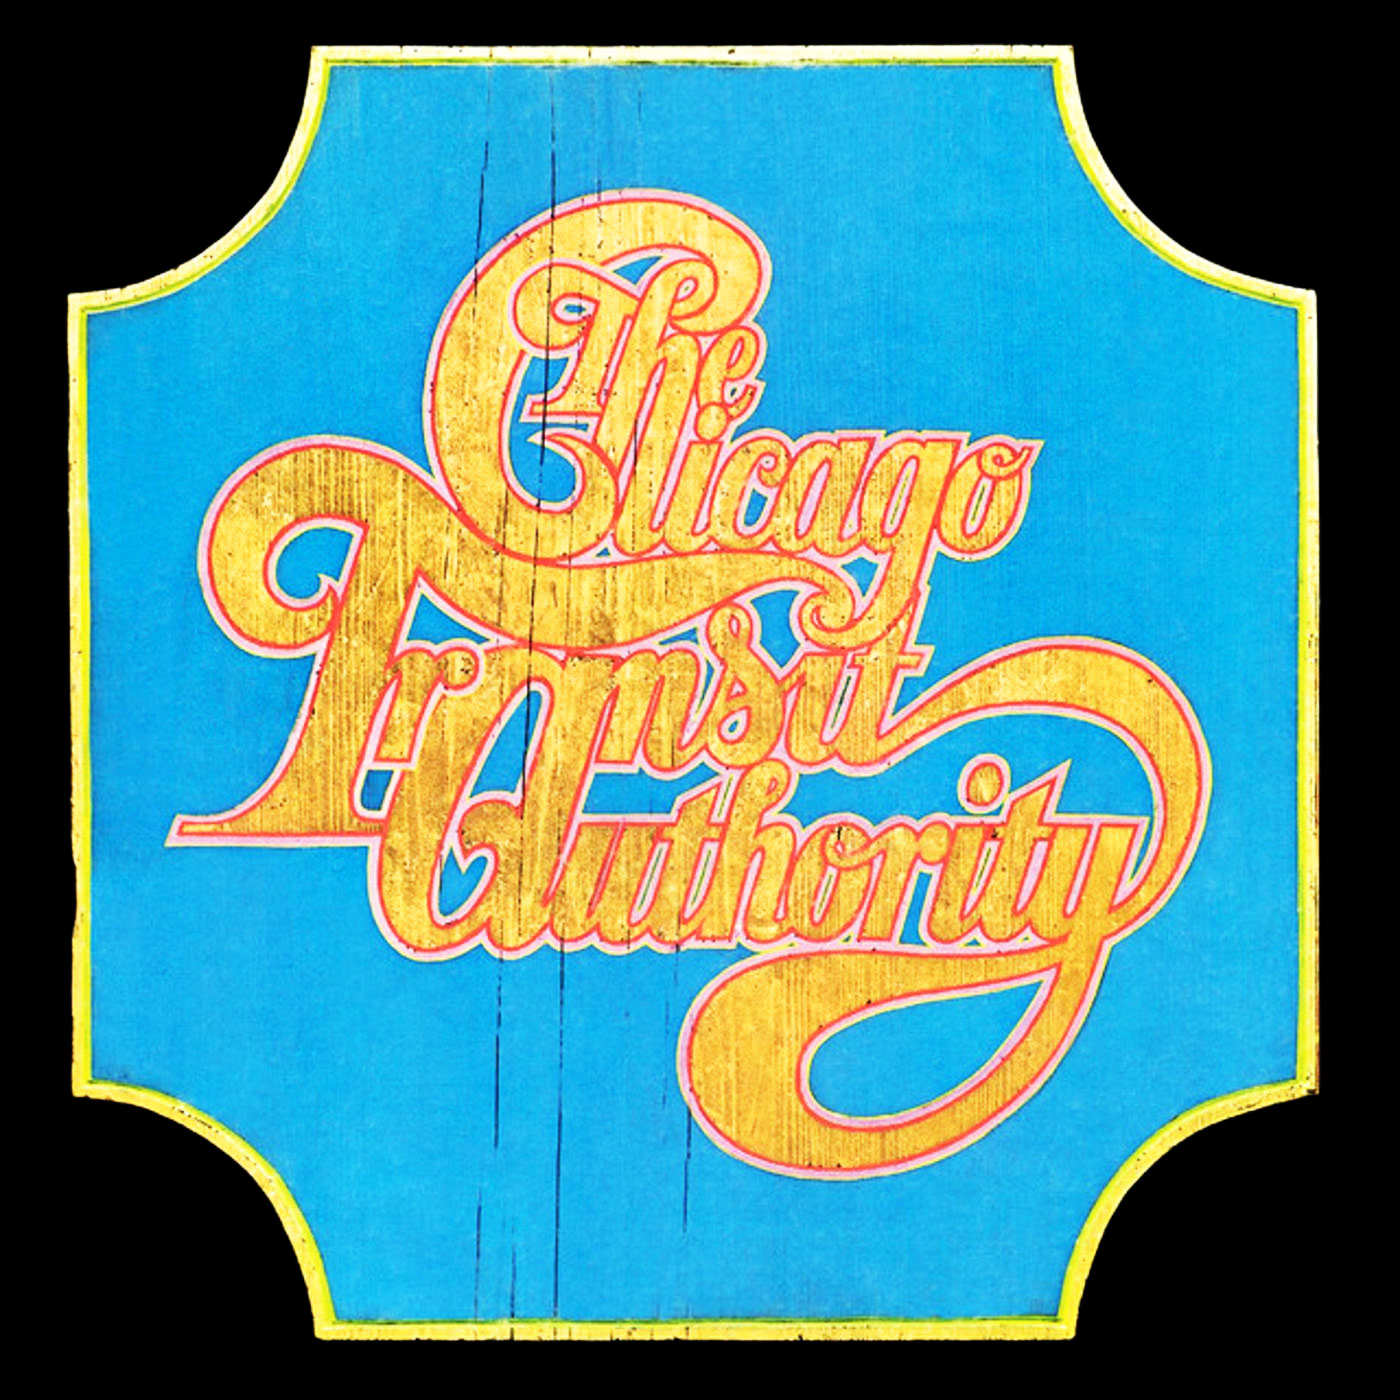 162 Chicago – Chicago Transit Authority